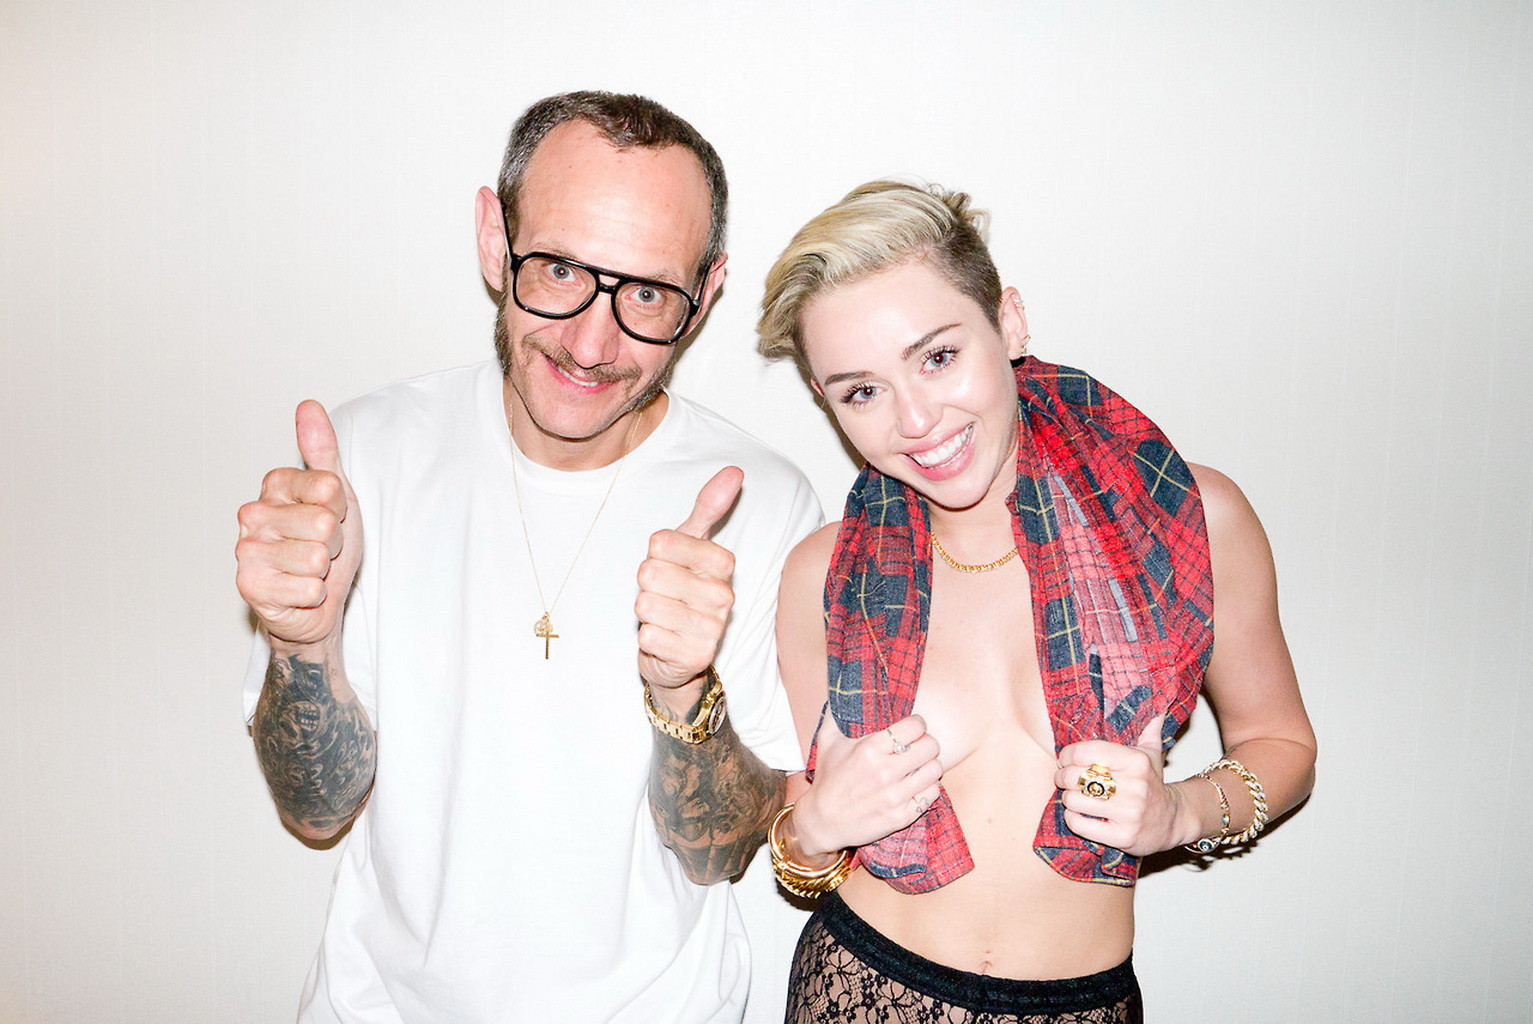 Miley cyrus mostrando sus tetas coño en terry richardson photoshoot
 #75217343